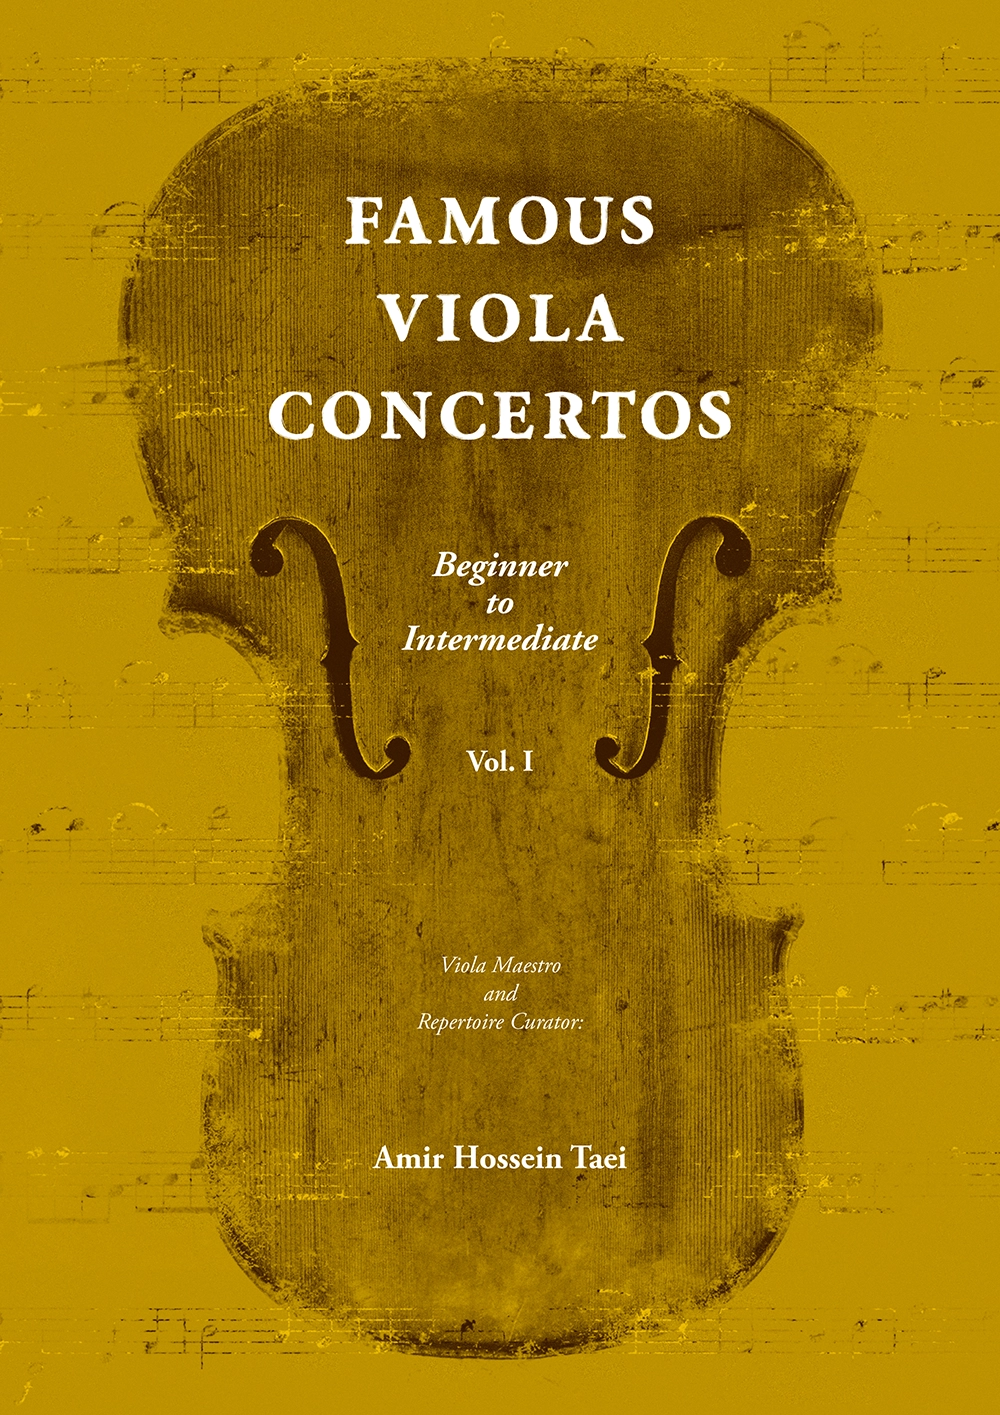 “Famous Viola Concertos Vol. 1” book has been released, 12 August 2023